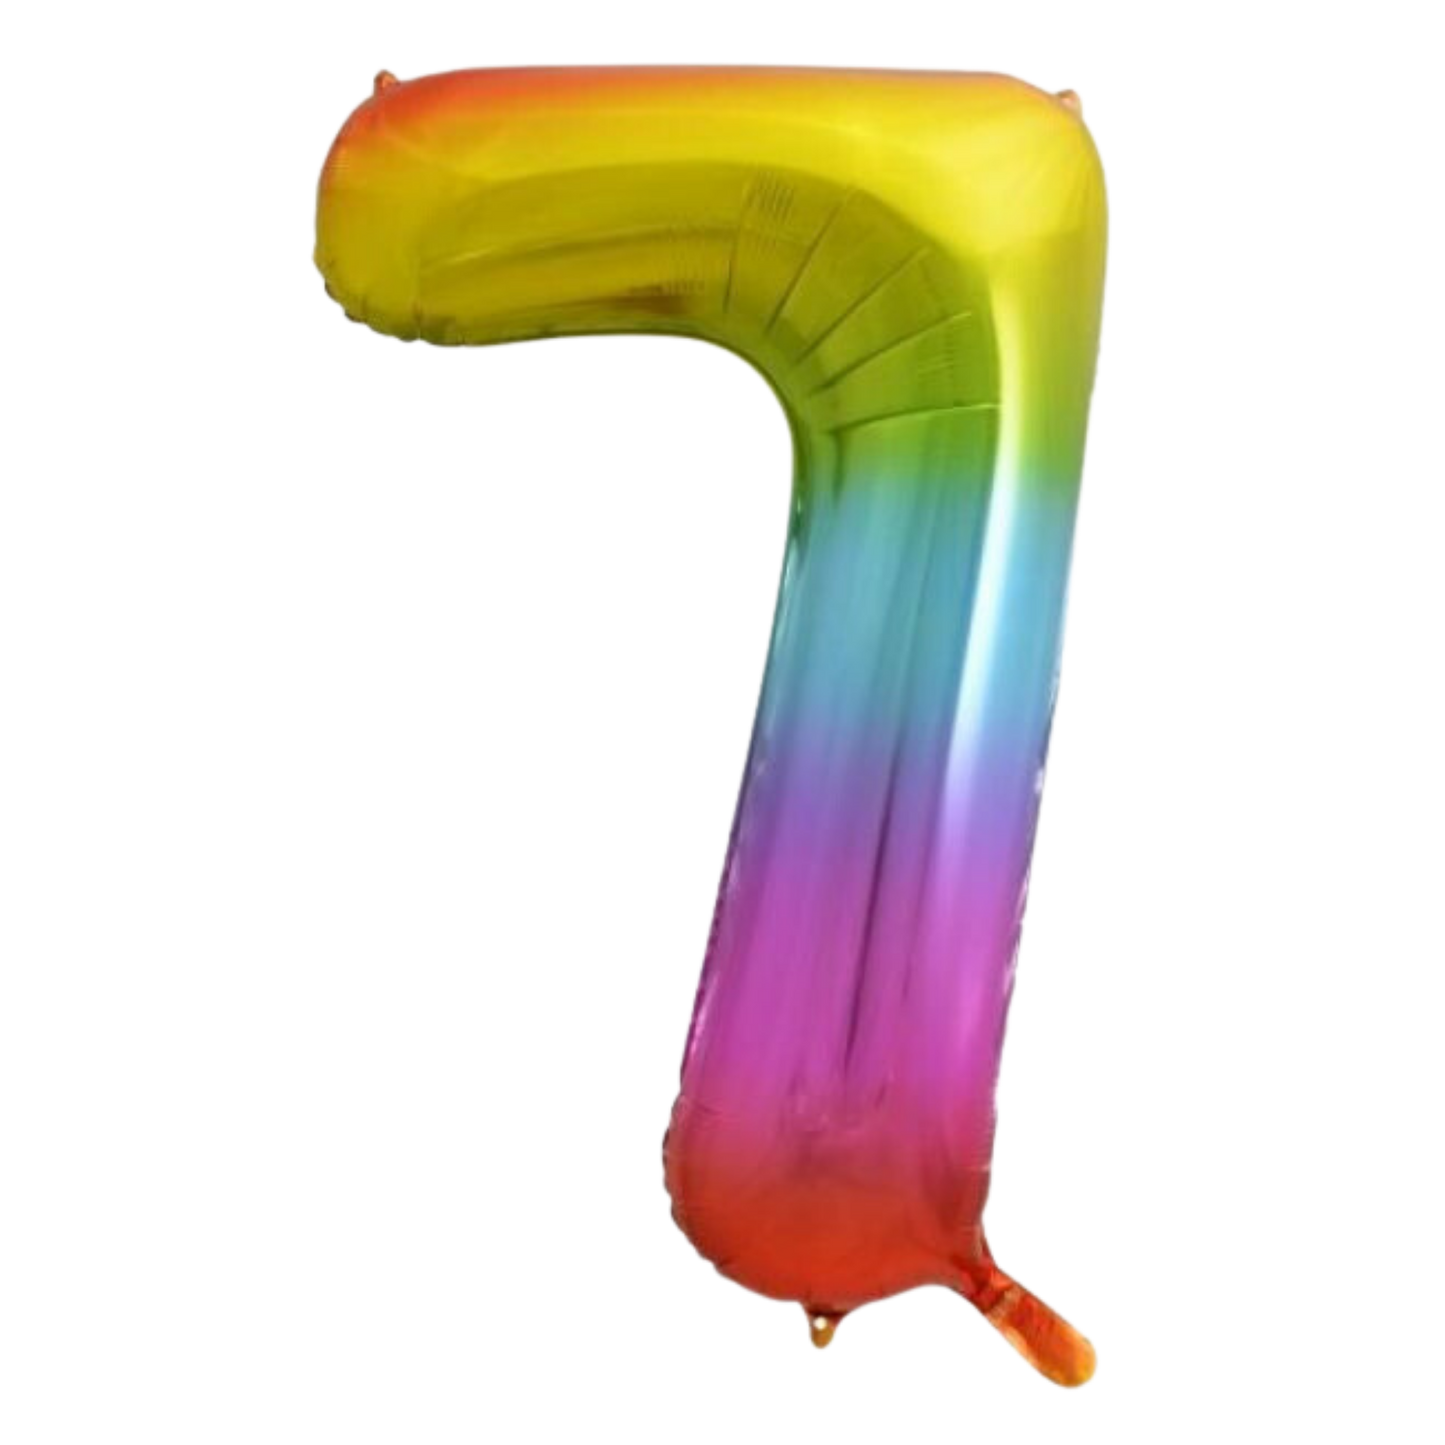 Large Foil Number - Rainbow